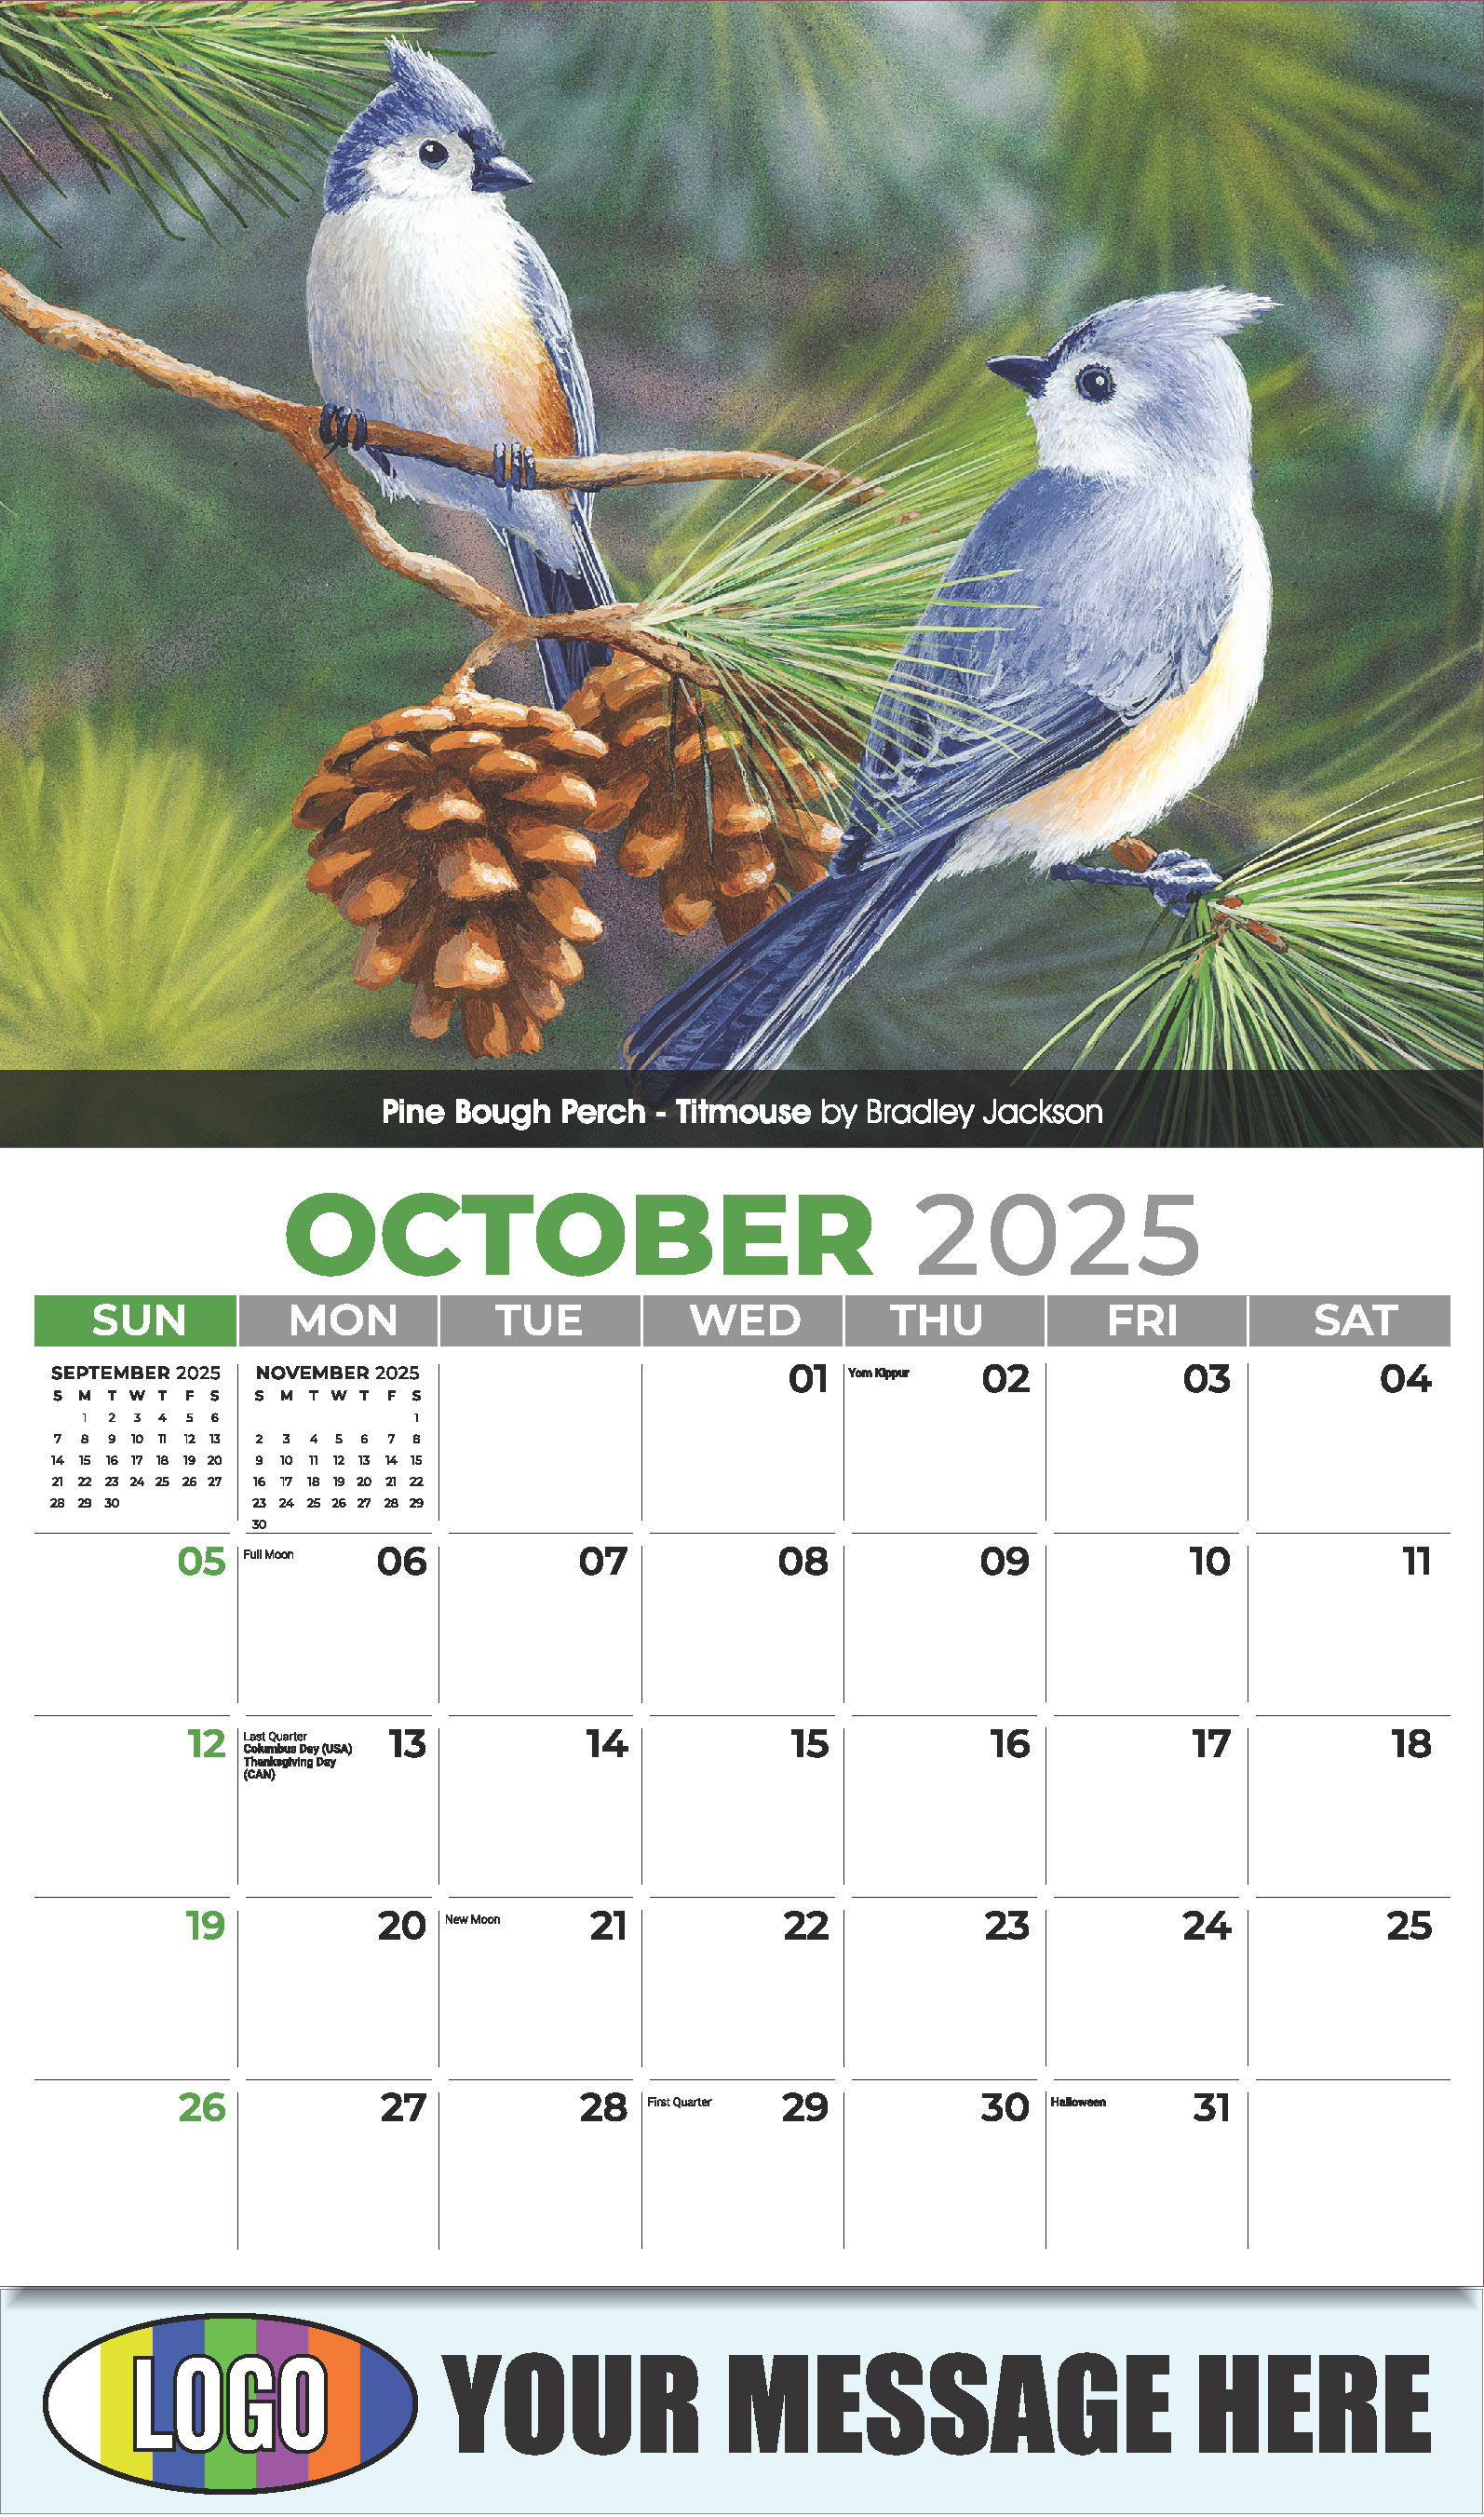 Garden Birds 2025 Business Promotional Calendar - October